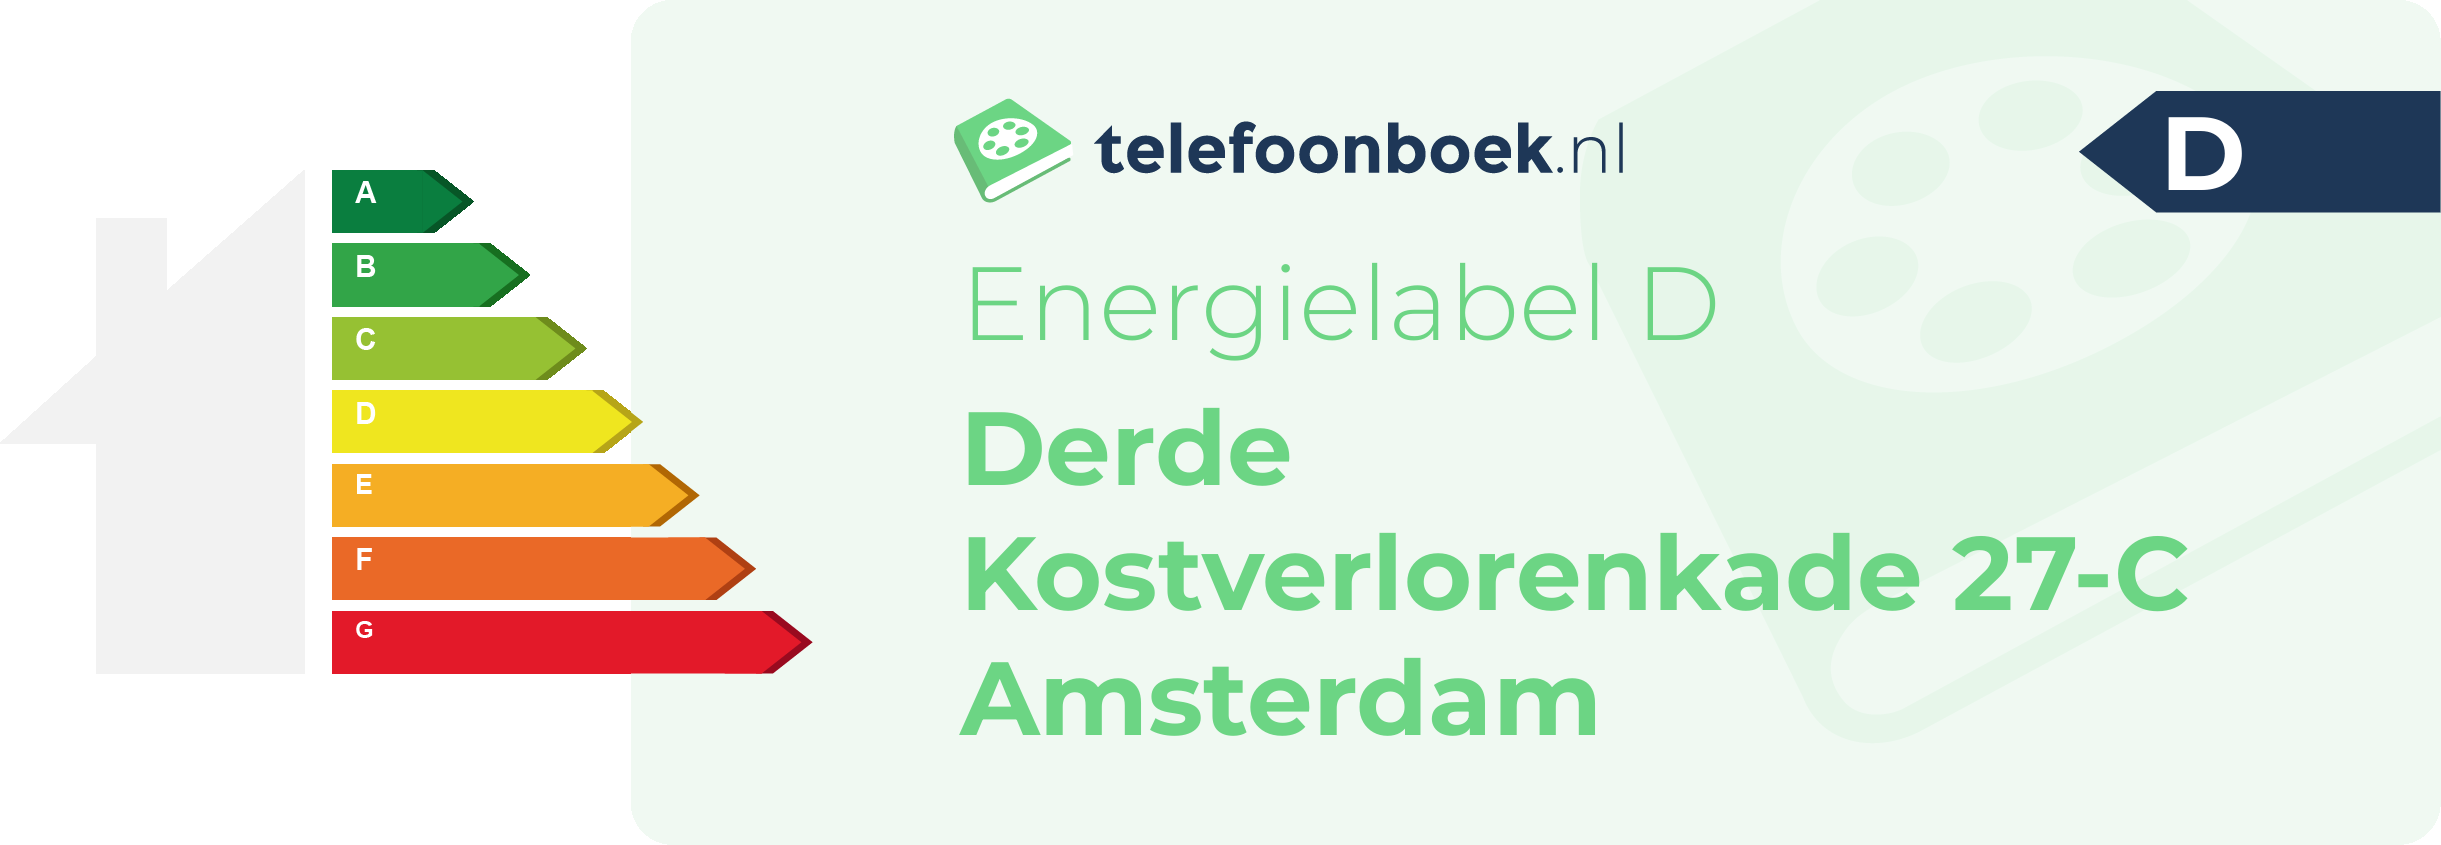 Energielabel Derde Kostverlorenkade 27-C Amsterdam